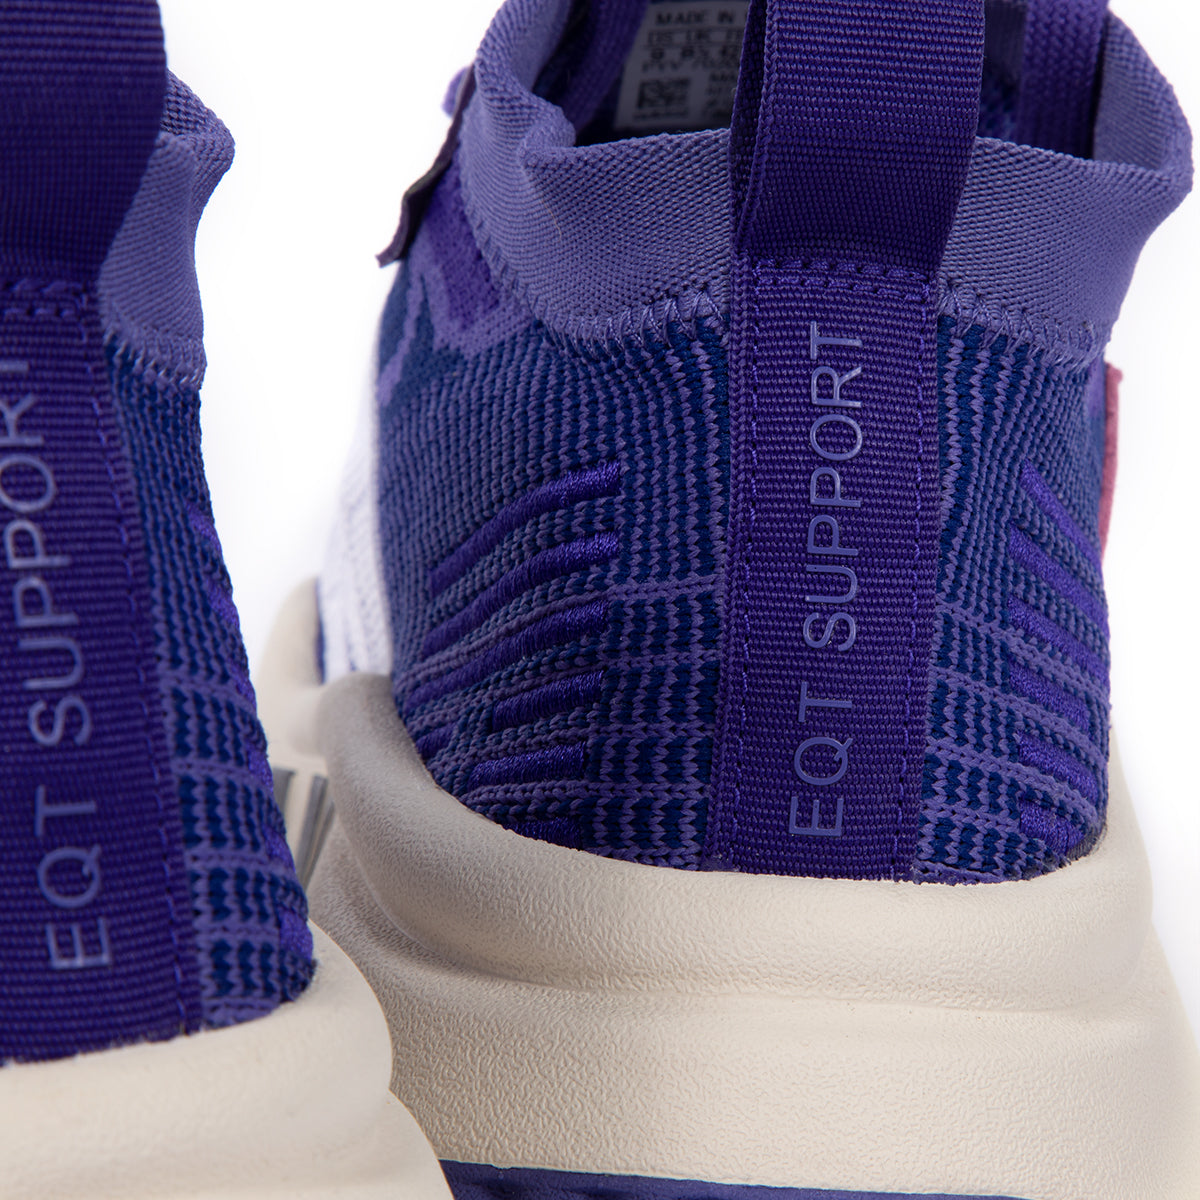 adidas eqt support purple